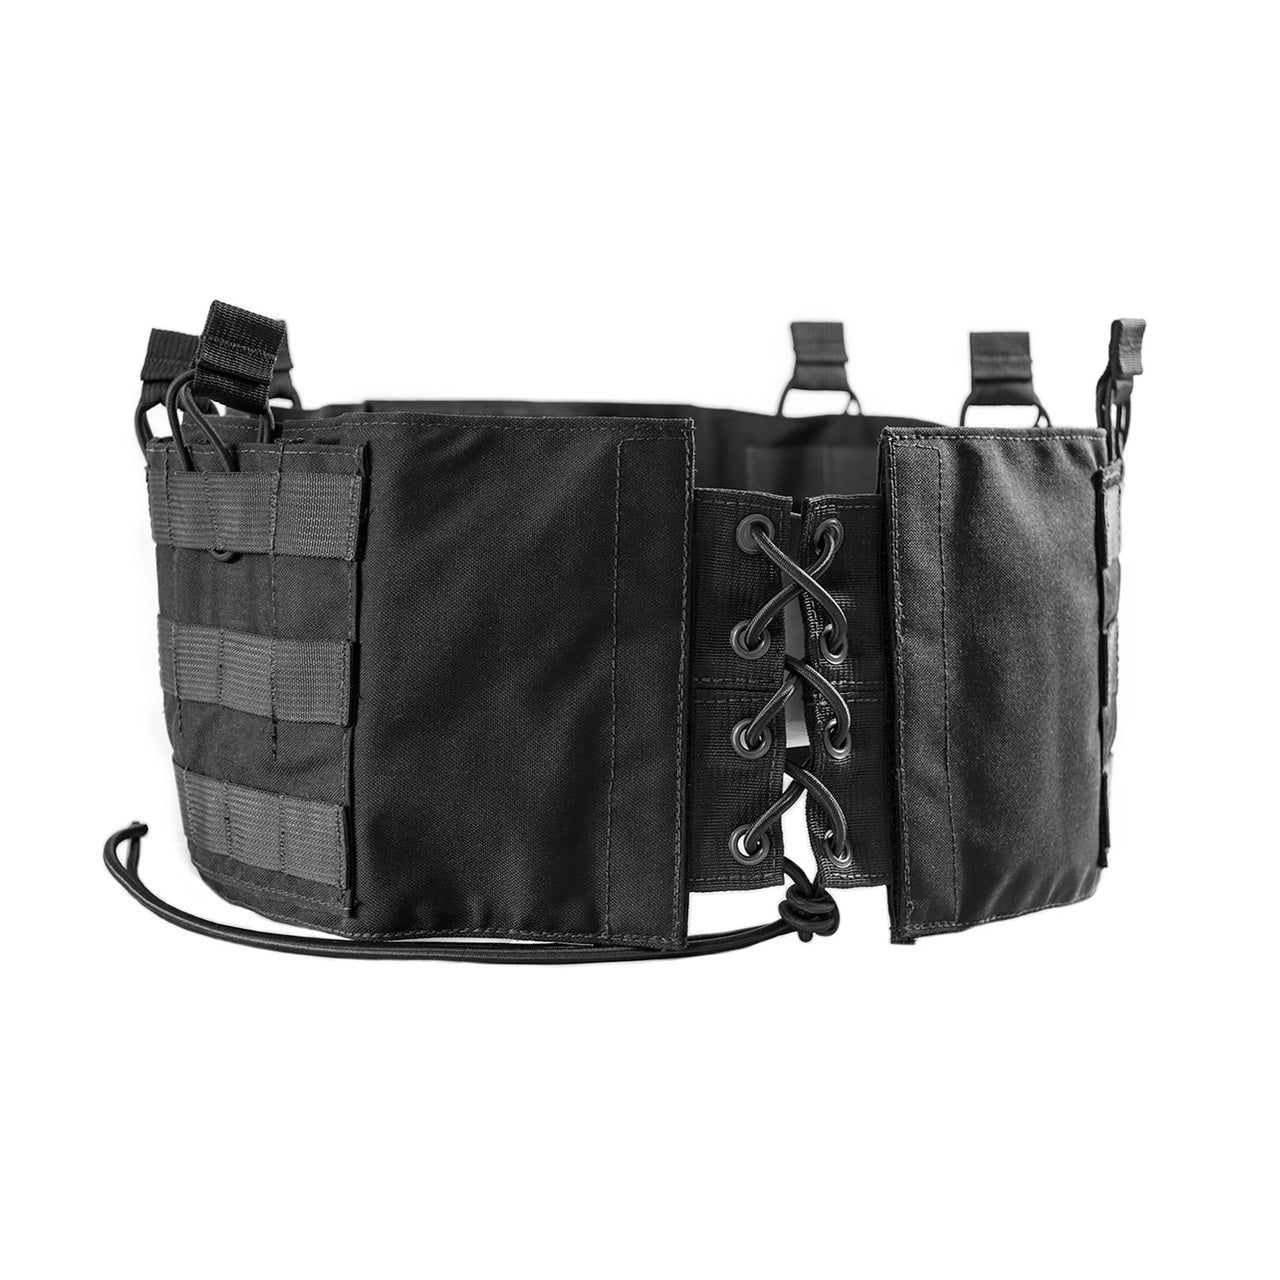 A Shellback Tactical Banshee Elite Cummerbund with two straps on it.